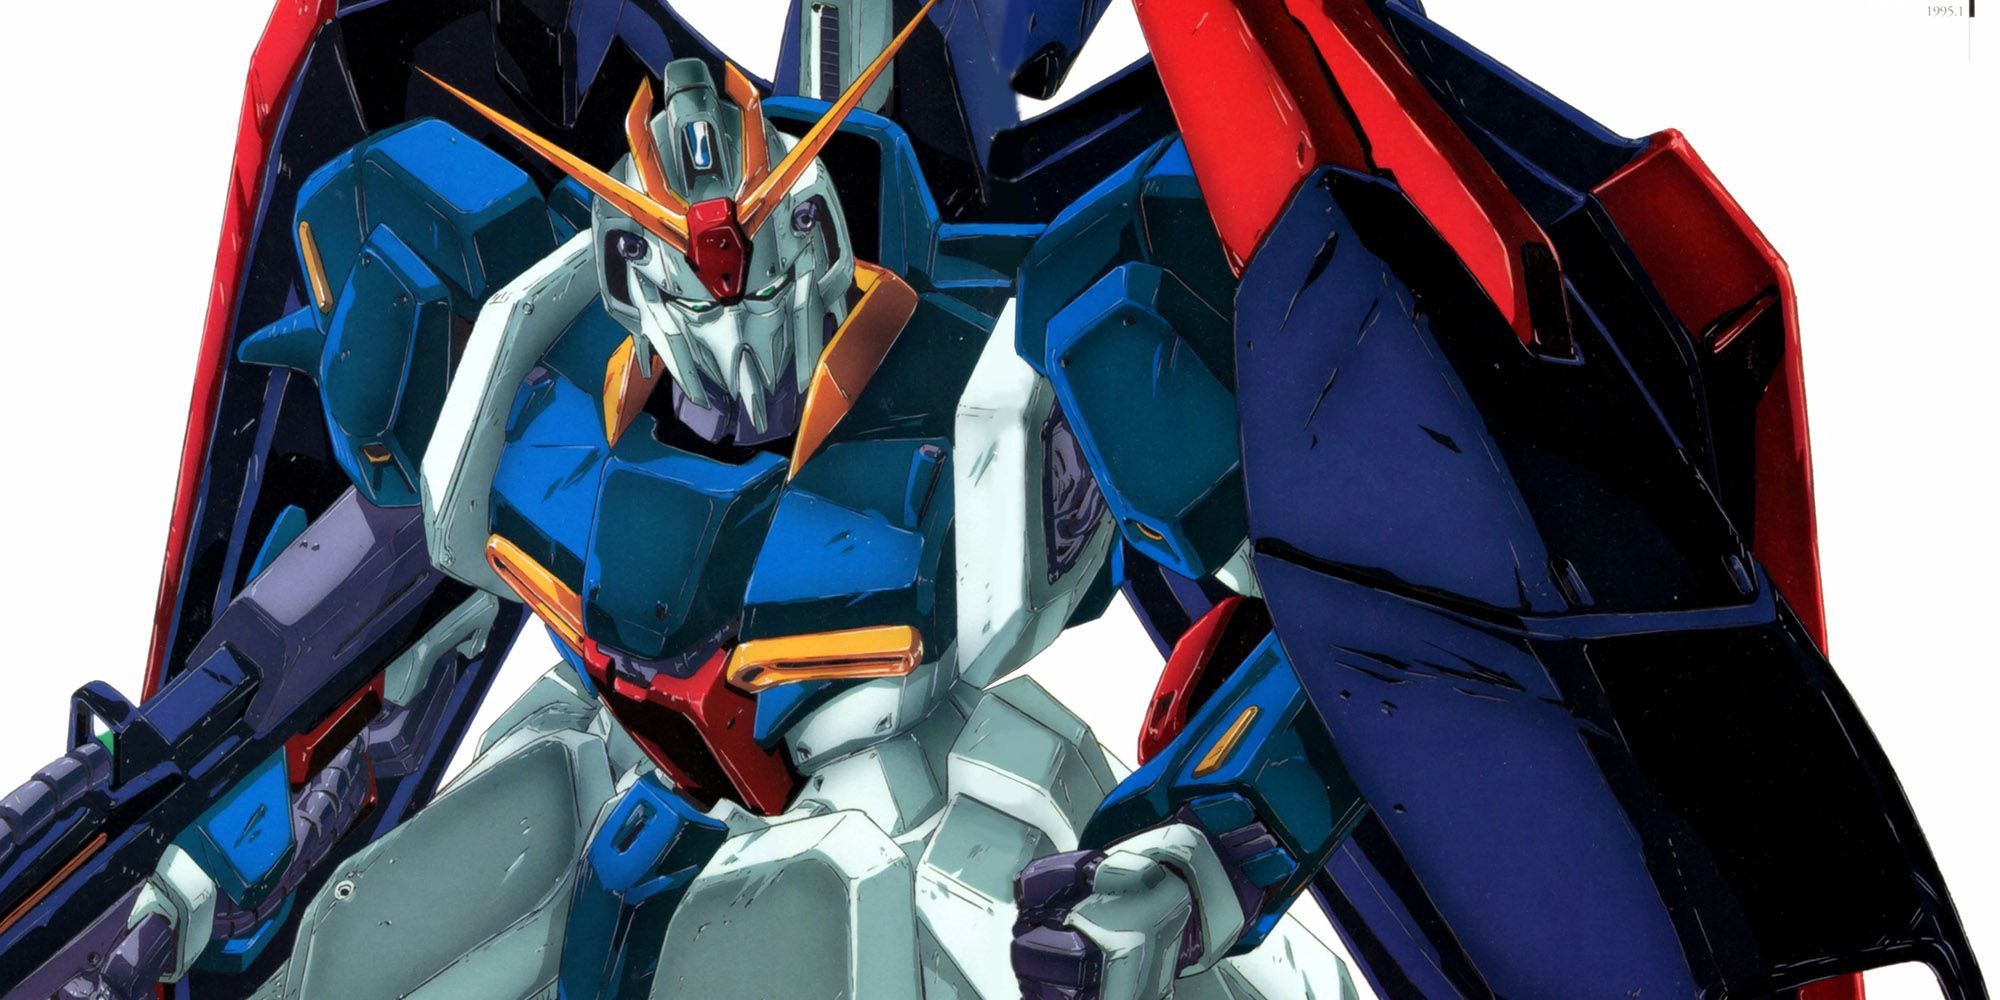 Close Up Official Art Of Gundam Zeta From Mobile Suit Zeta Gundam